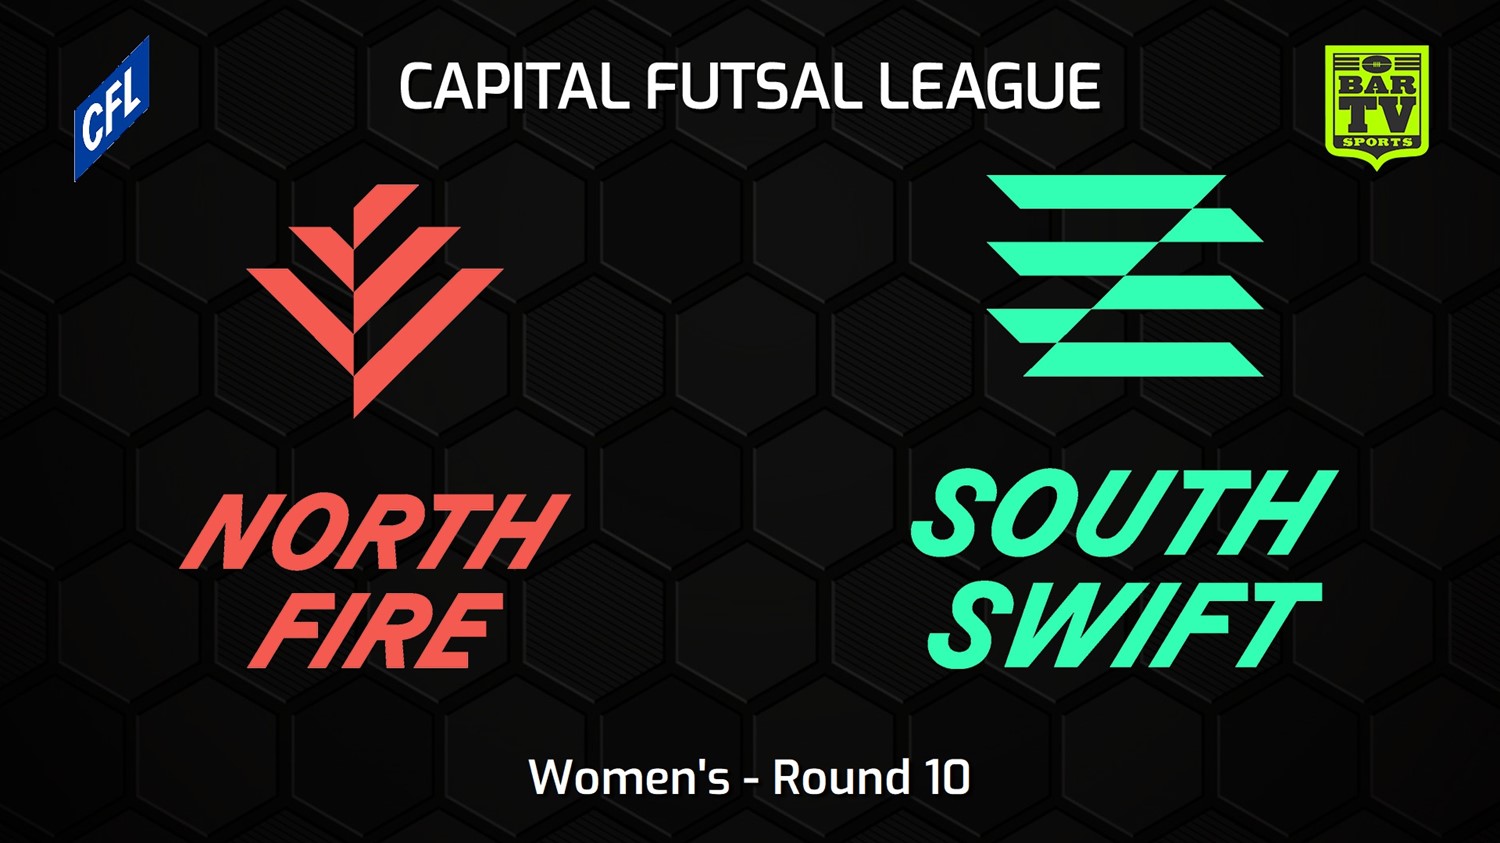 230205-Capital Football Futsal Round 10 - Women's - North Canberra Fire v South Canberra Swift Minigame Slate Image